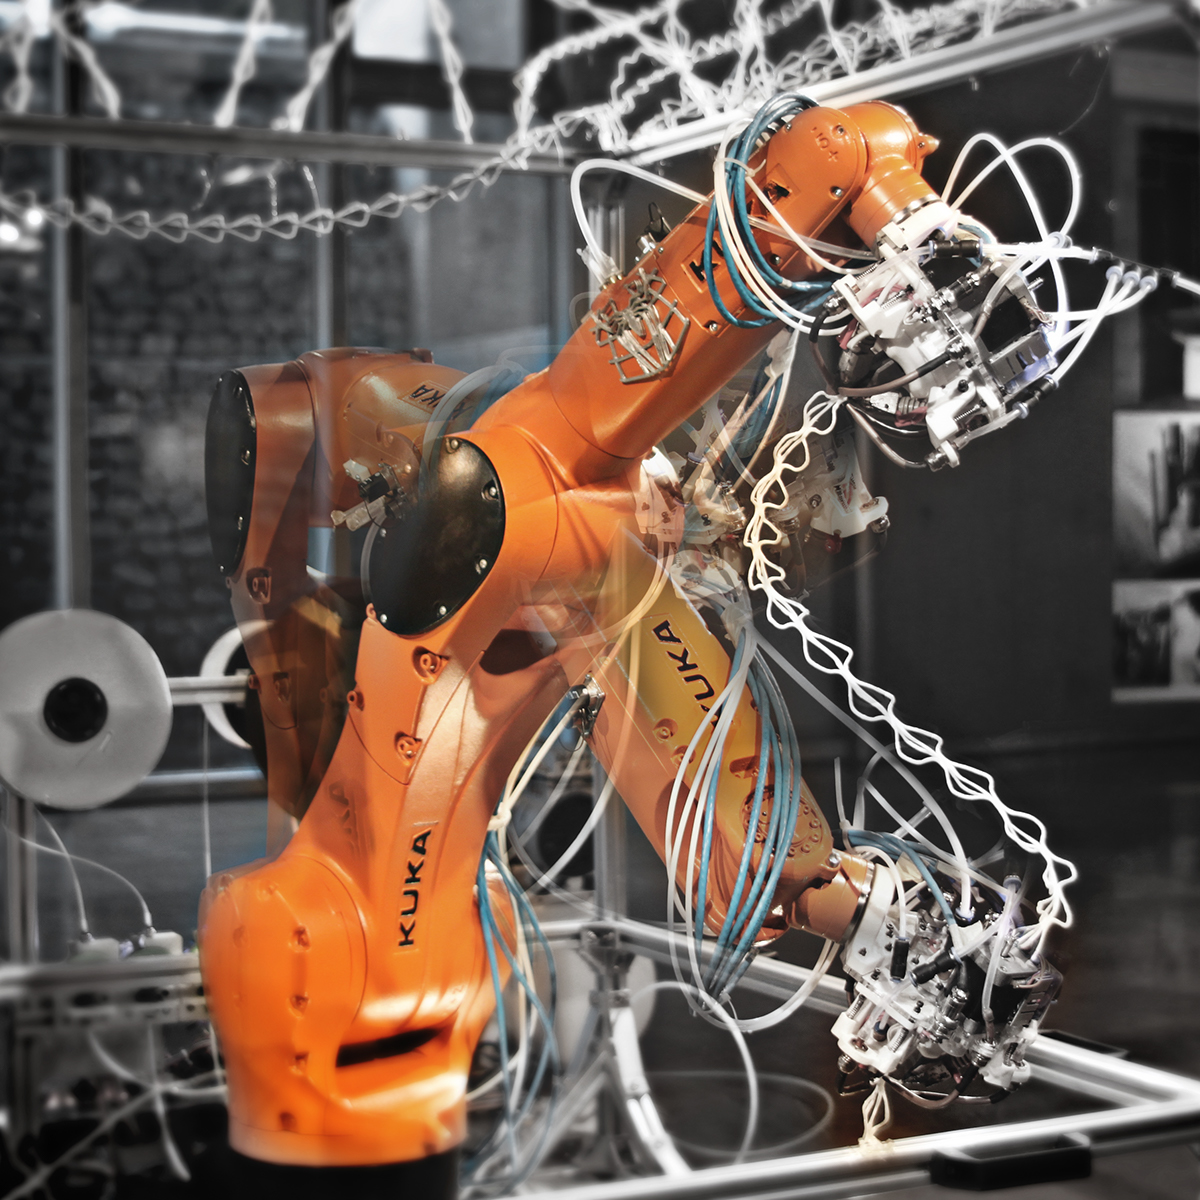 robotics Kuka robot 3d printing abs Self-supporting Structure digital fabrication digital tectonics Autonomous Fabrication Digital Craftsmanship